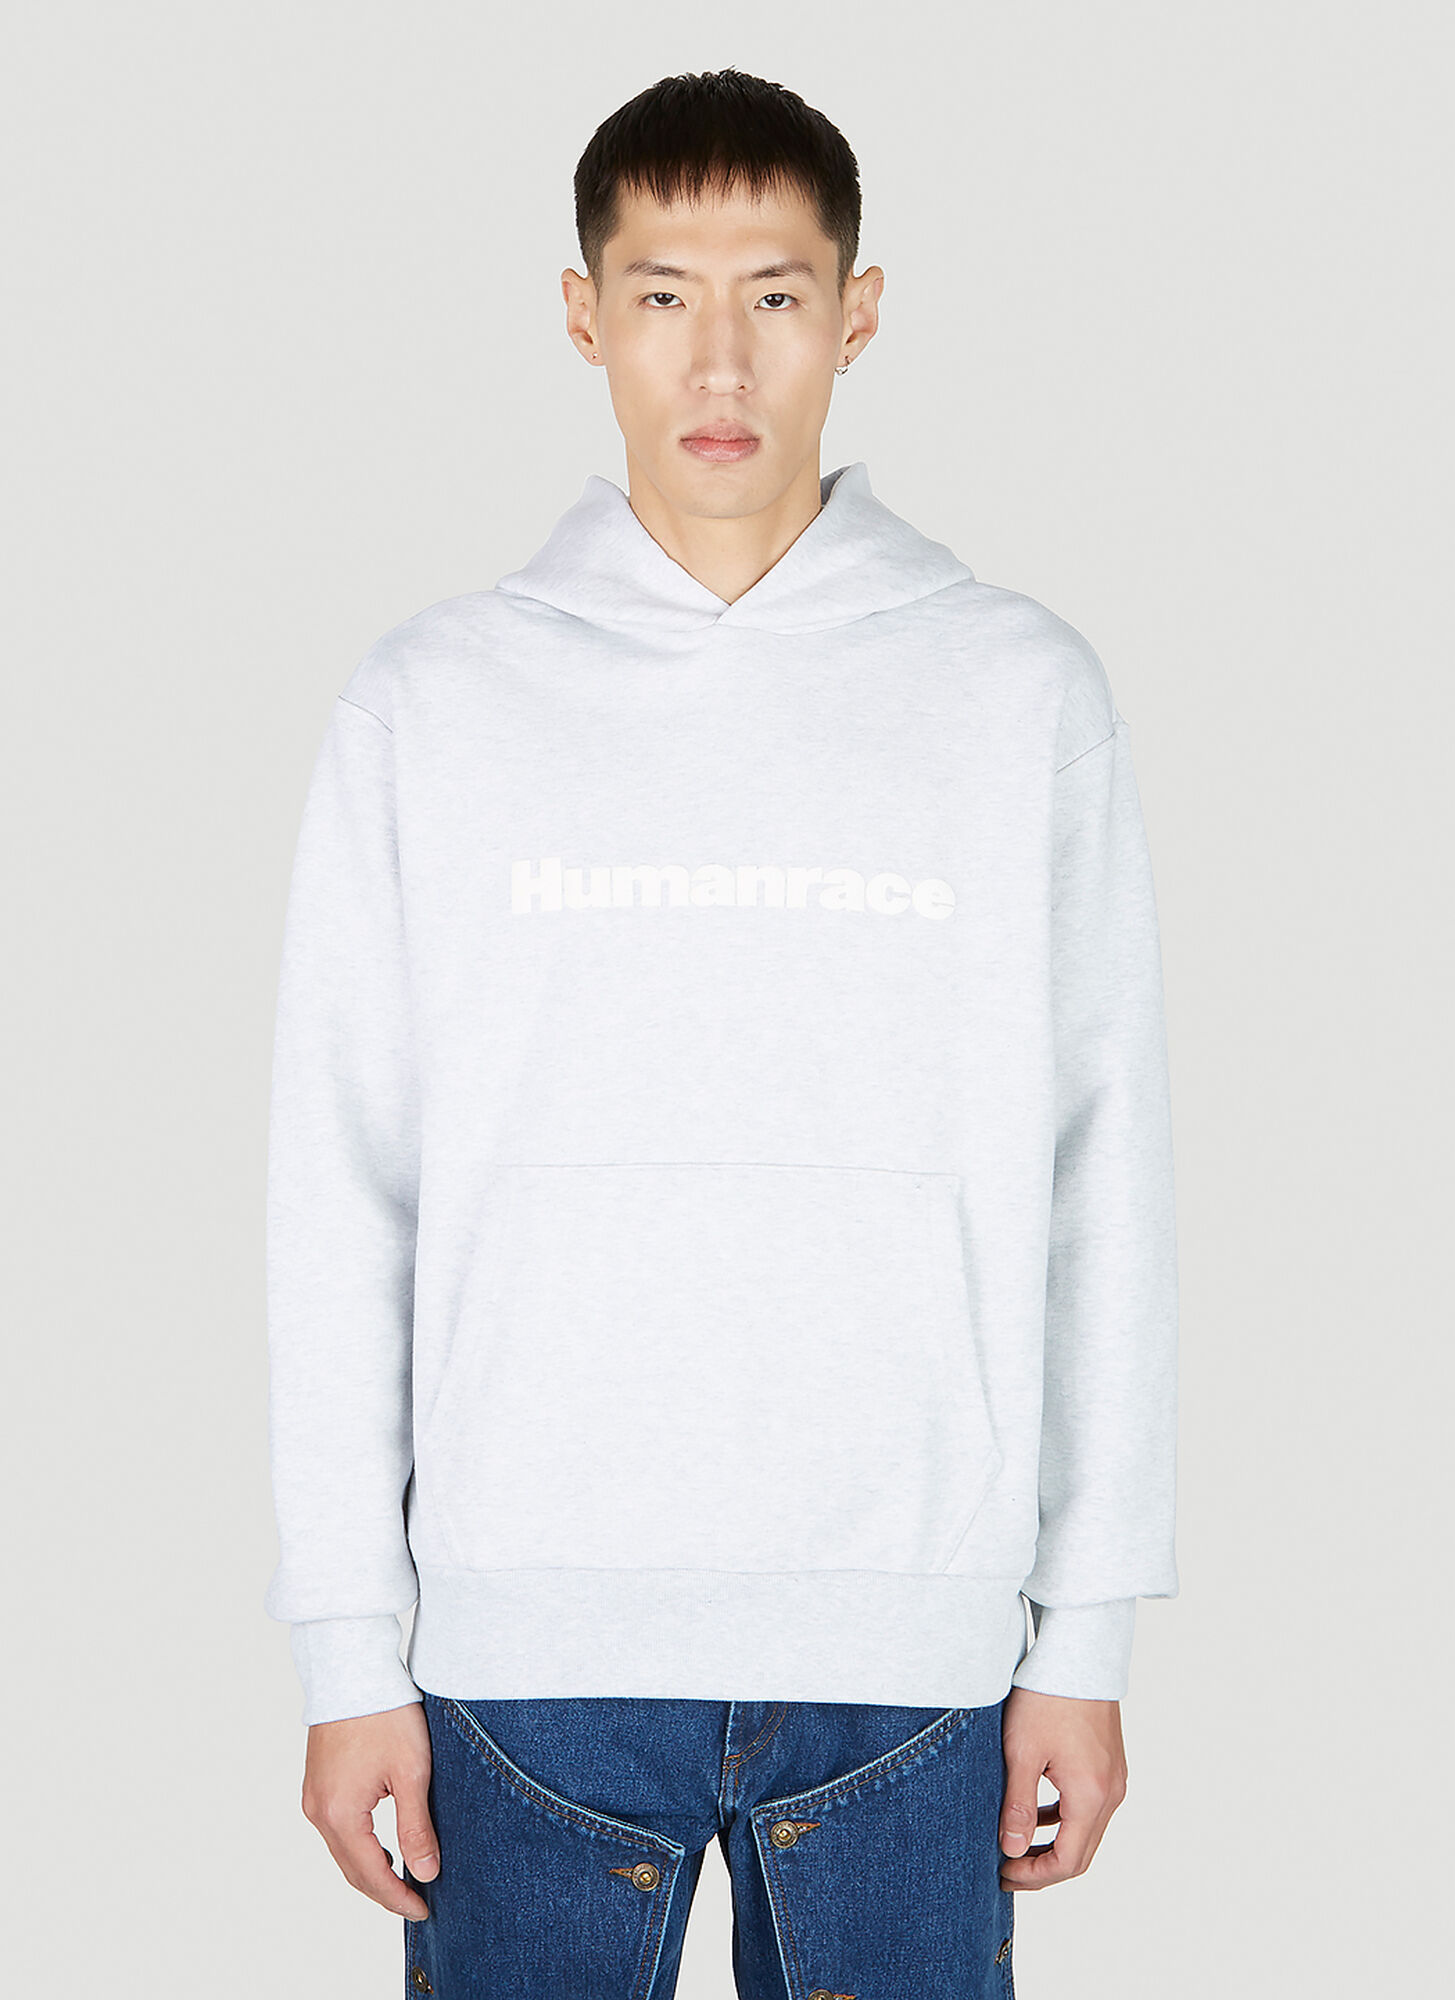 Adidas X Humanrace Basics Hooded Sweatshirt Male Grey